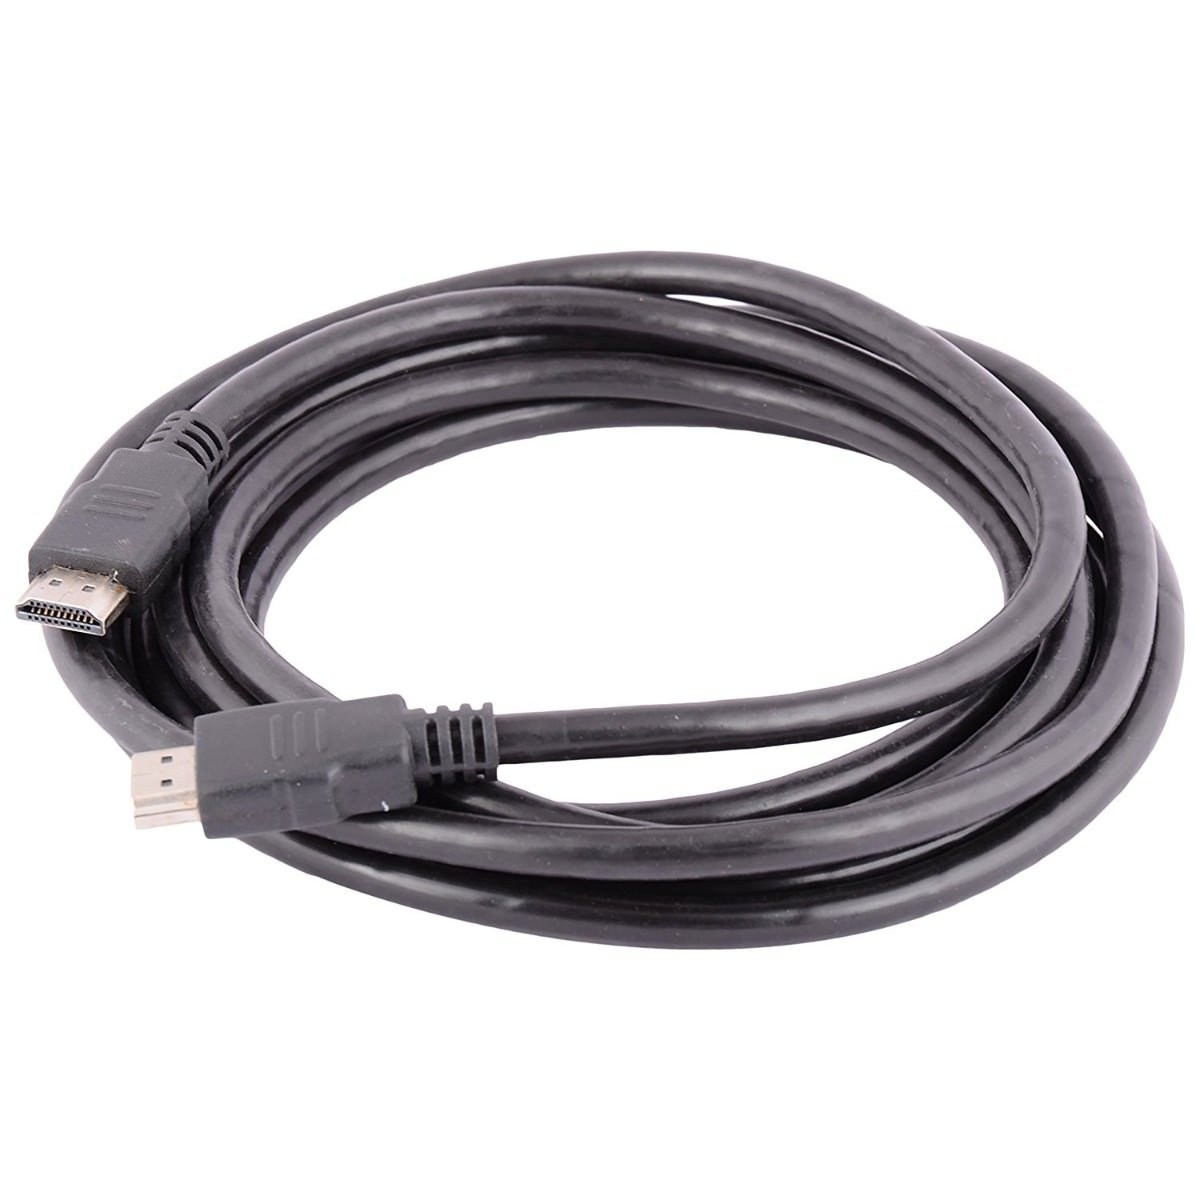 AD-Net 15mtr HDMI Cable (Black)